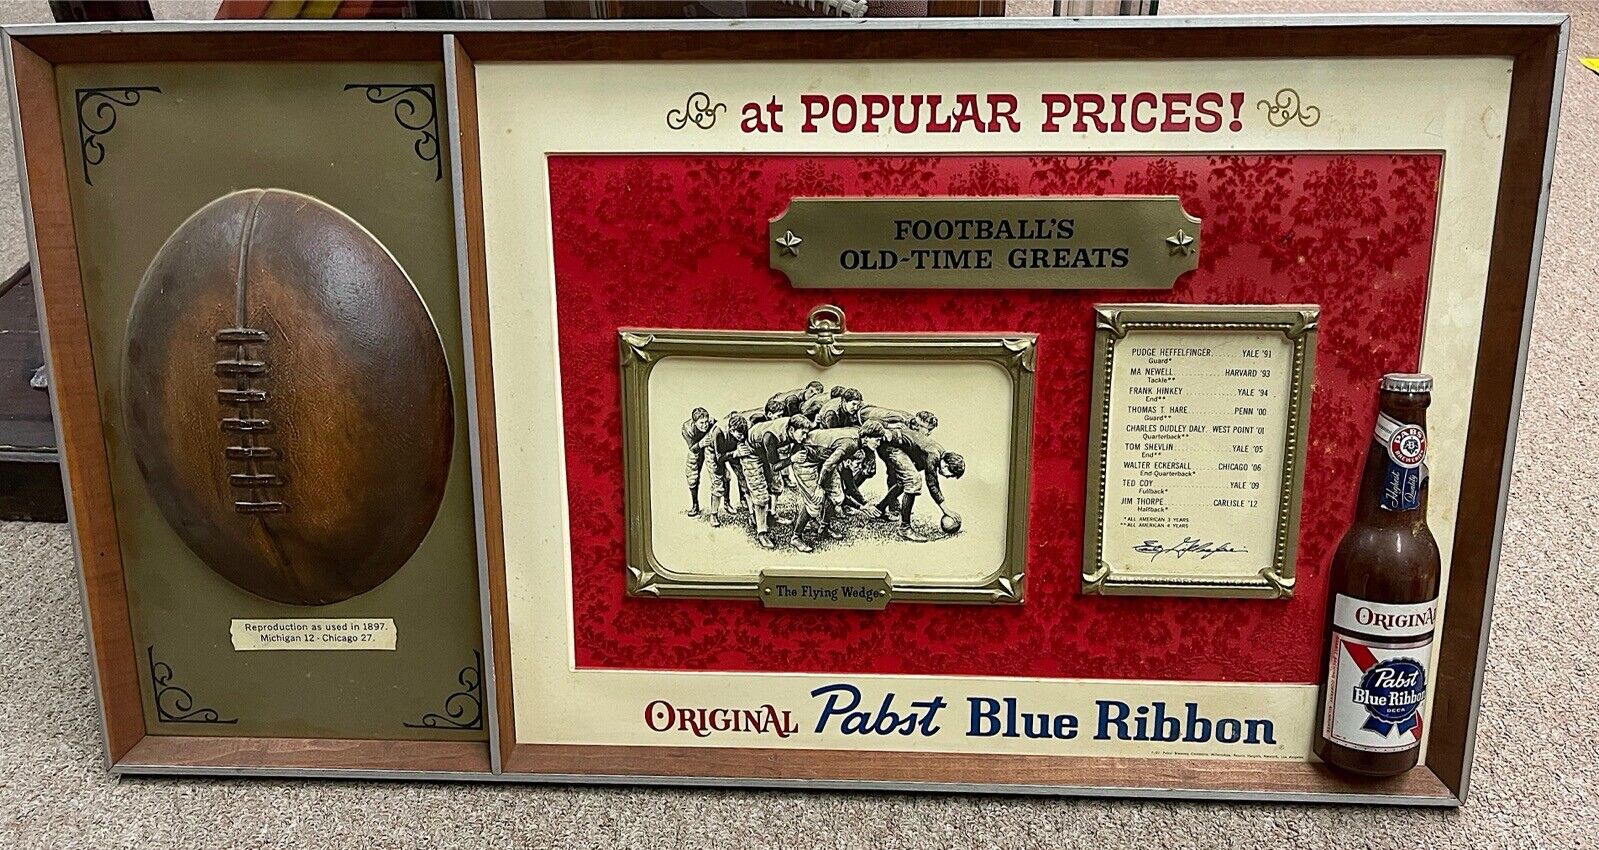 Orignal Vintage 1960’s Pabst Blue Ribbon Beer Sign Advertising Football 18x34